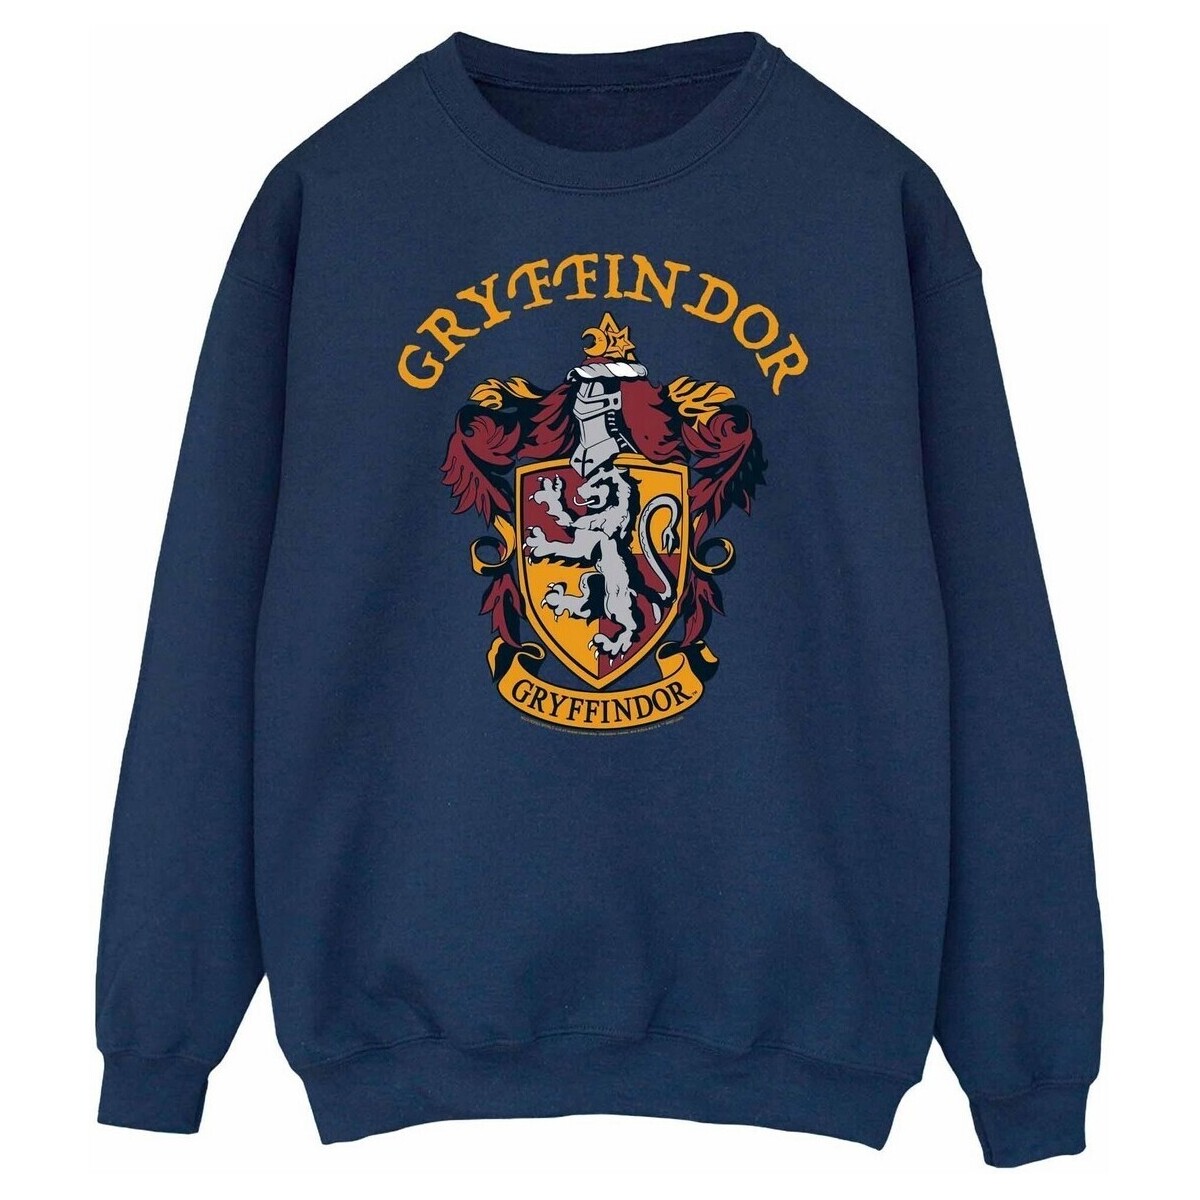 Vêtements Homme Sweats Harry Potter  Bleu